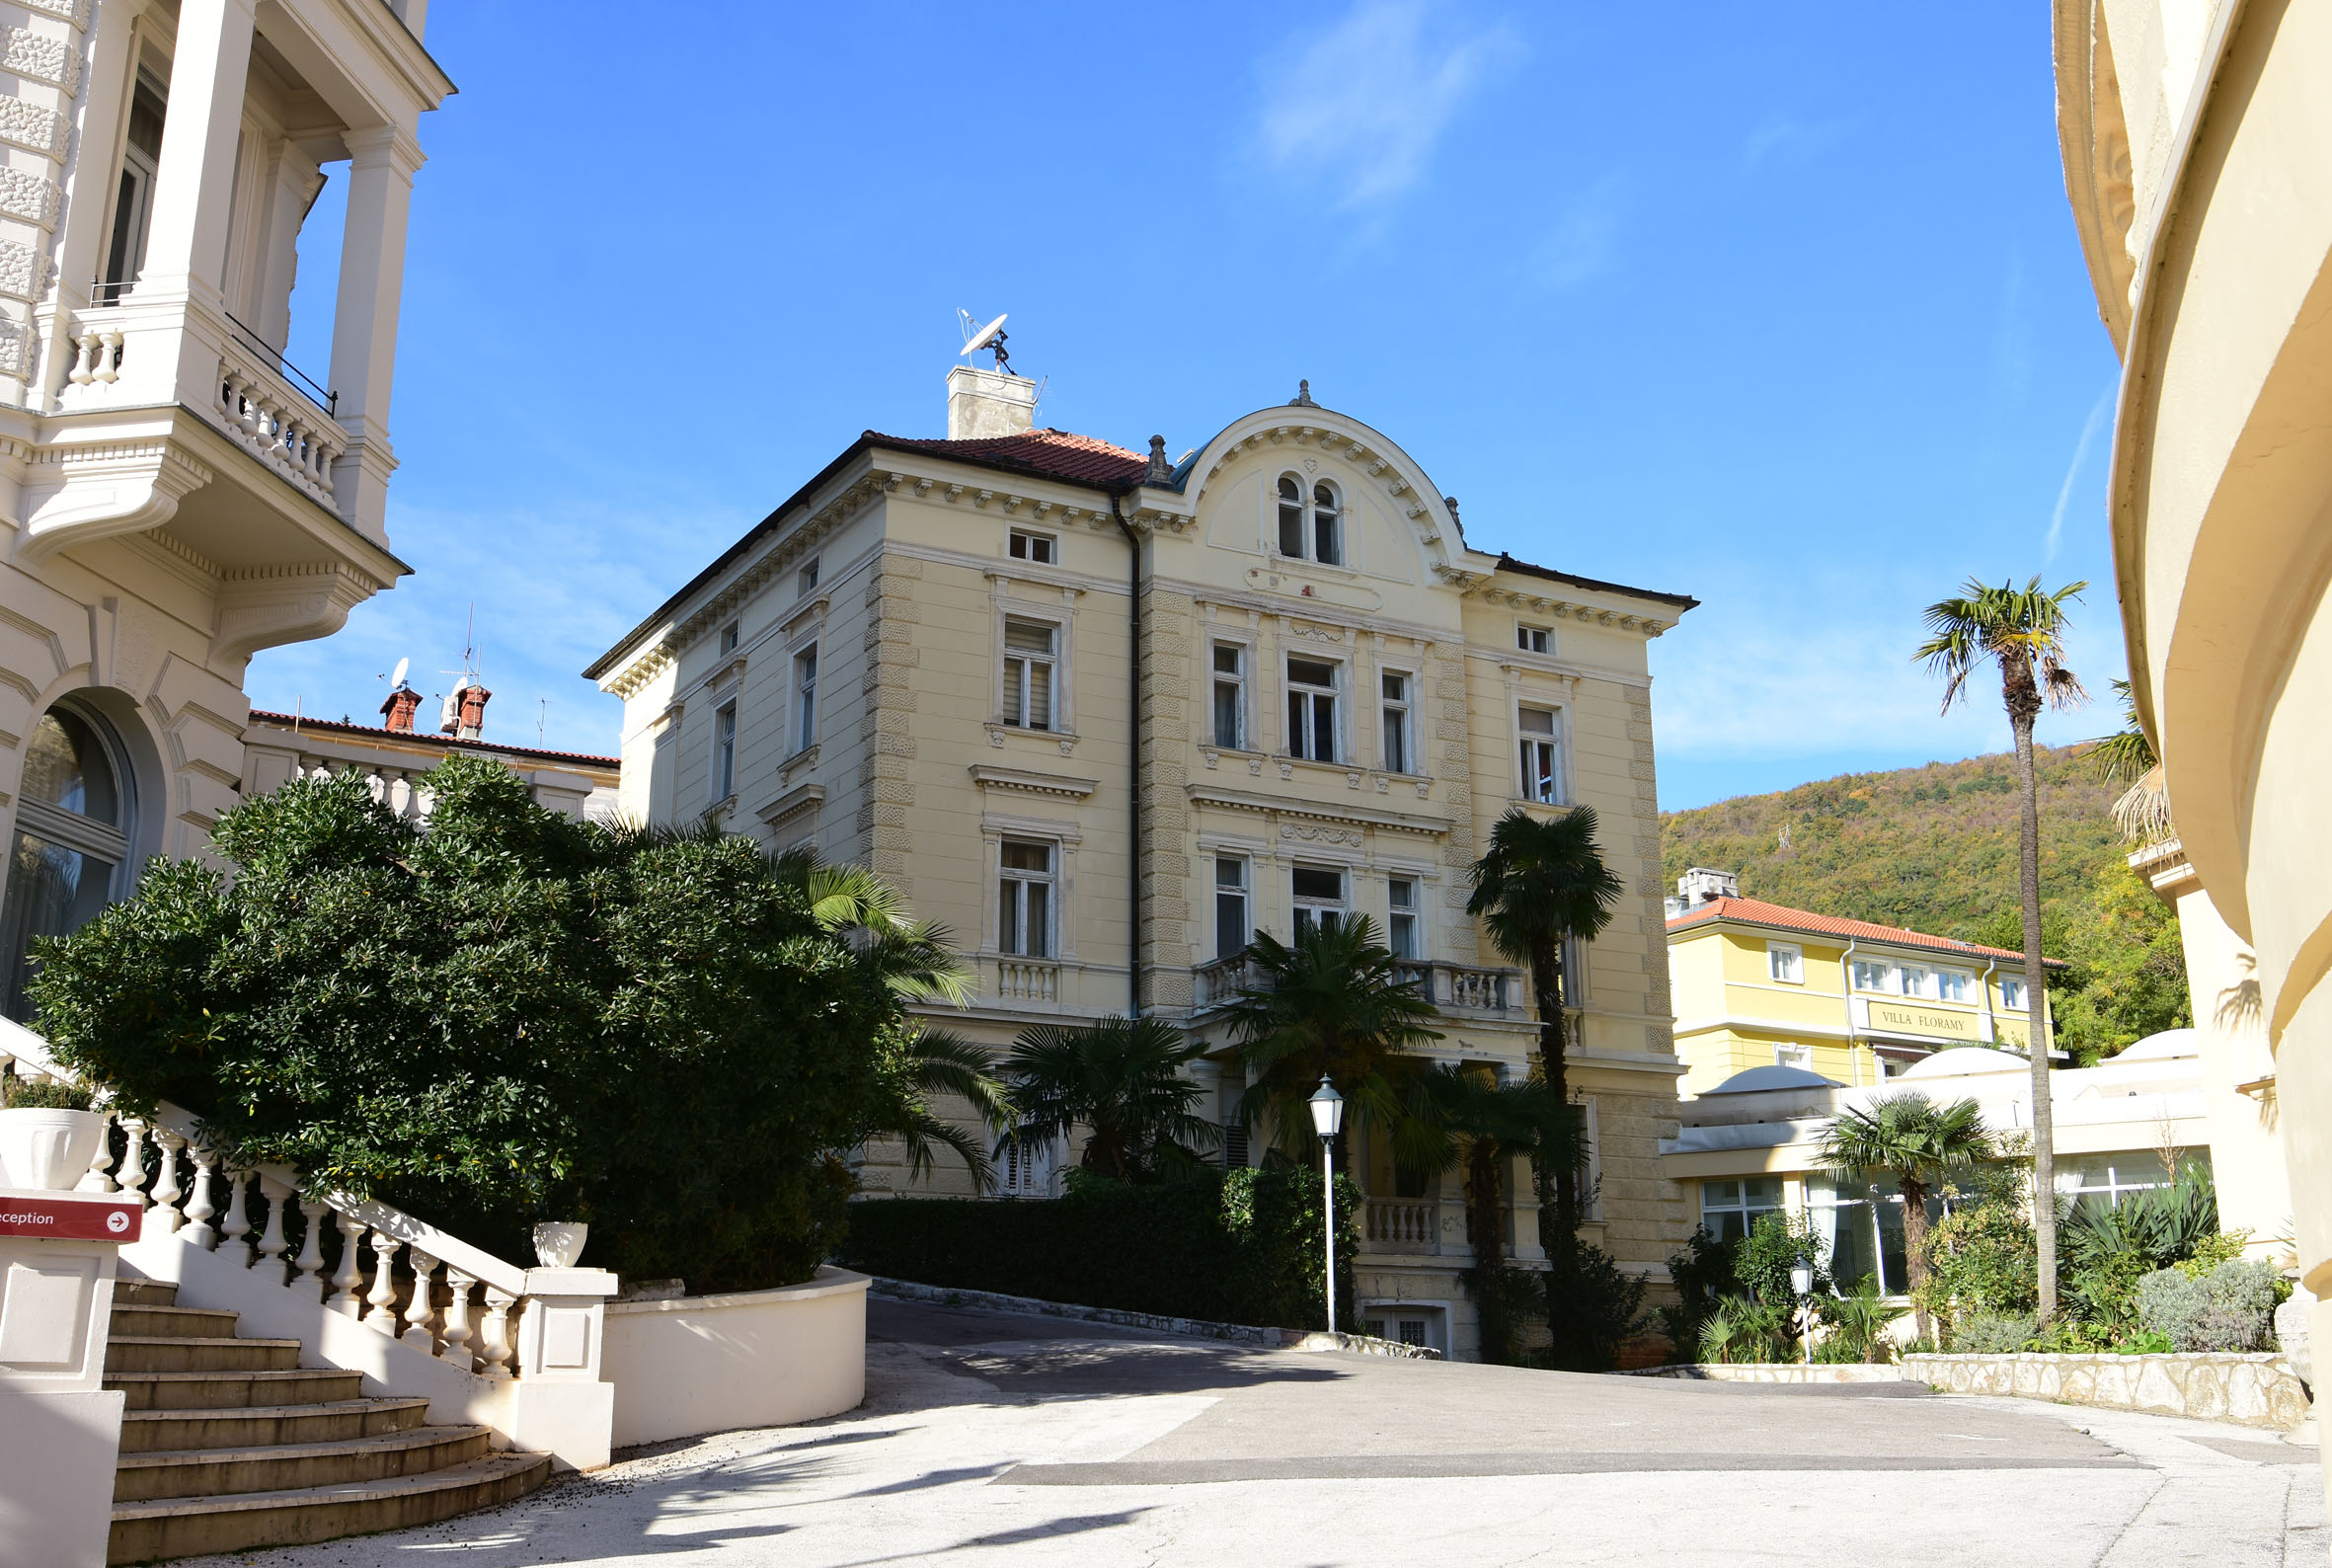 Villa Abbazia imat će dvanaest soba i jedan luksuzni apartman